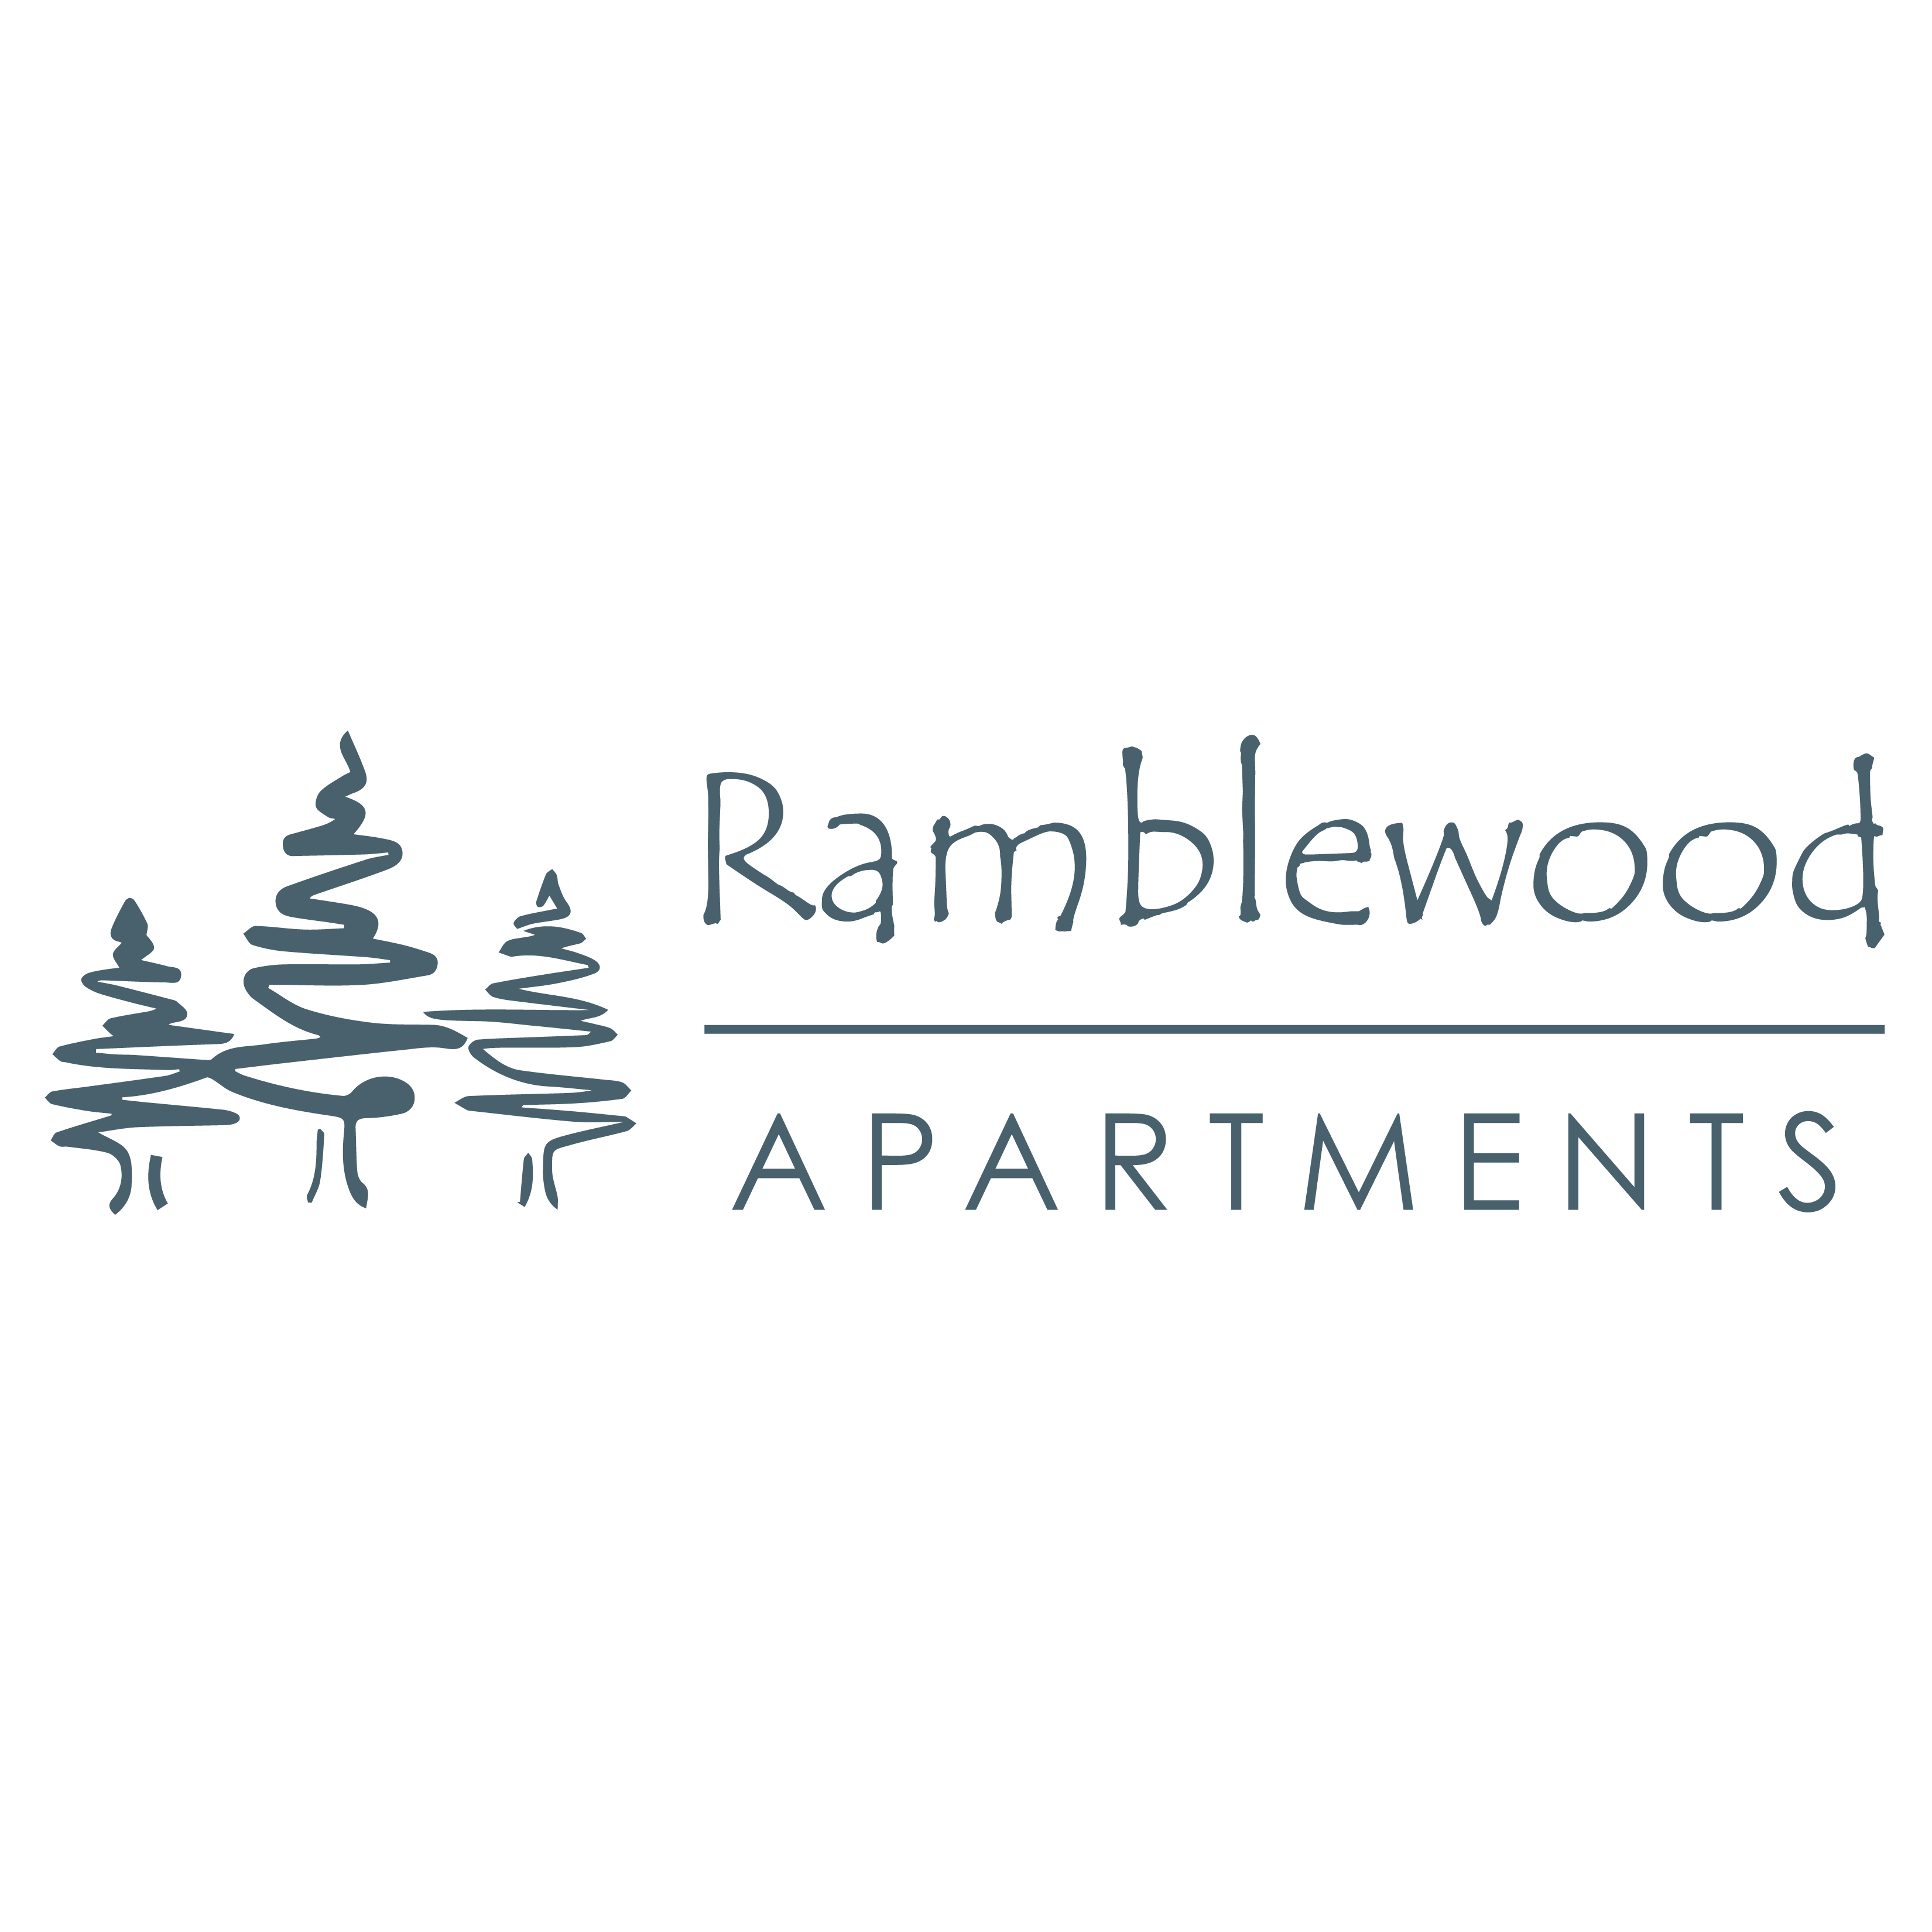 Ramblewood Apartments - Fort Collins, CO 80521 - (970)427-9383 | ShowMeLocal.com